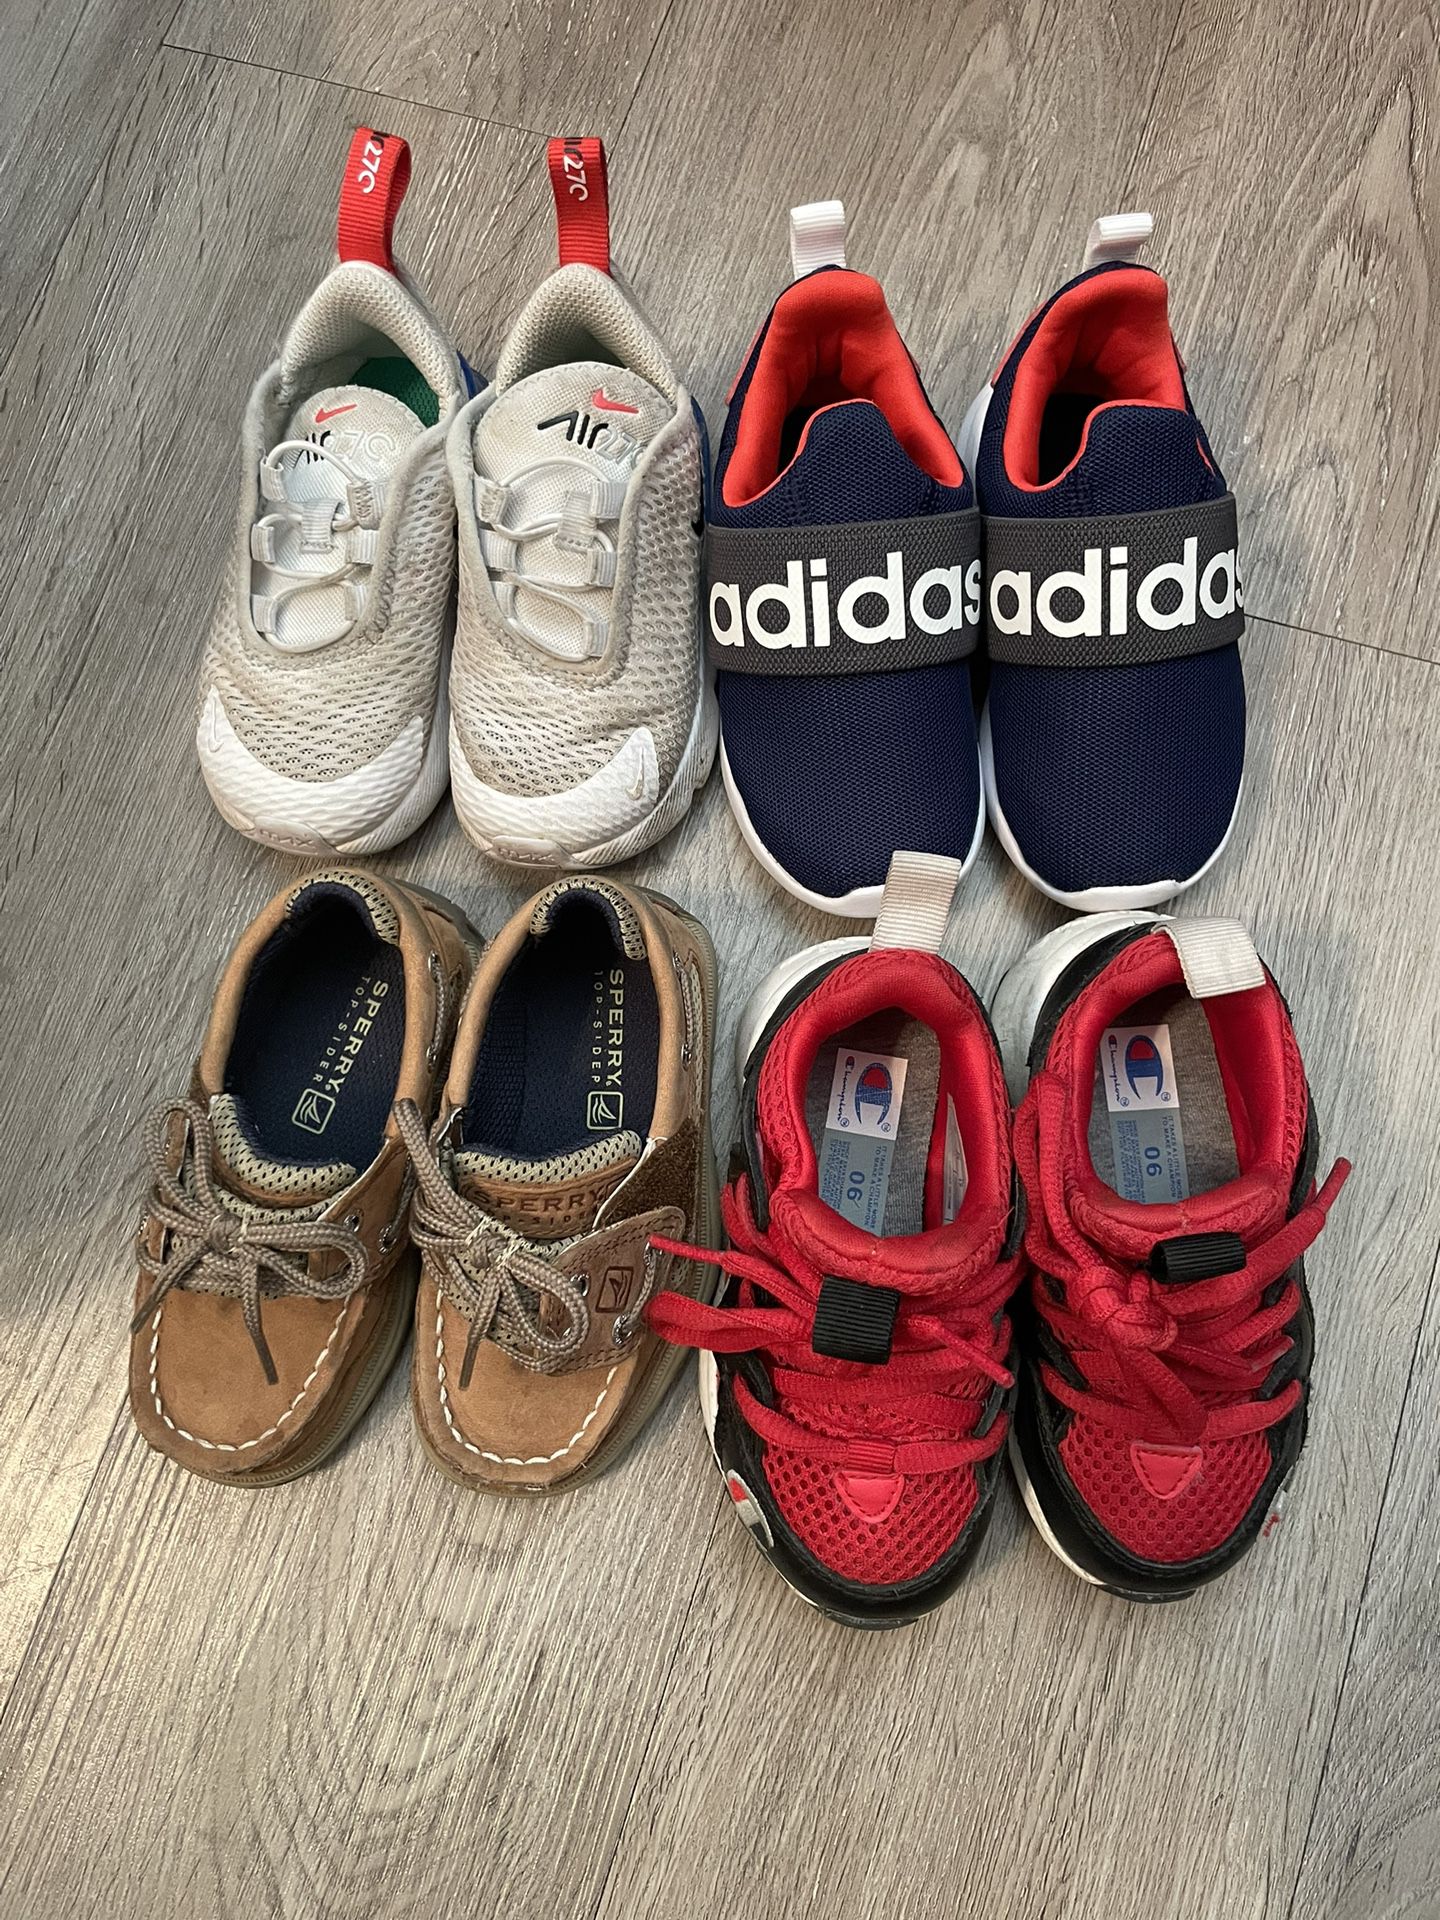 Toddler Boy Shoes 4-7 Sizes 